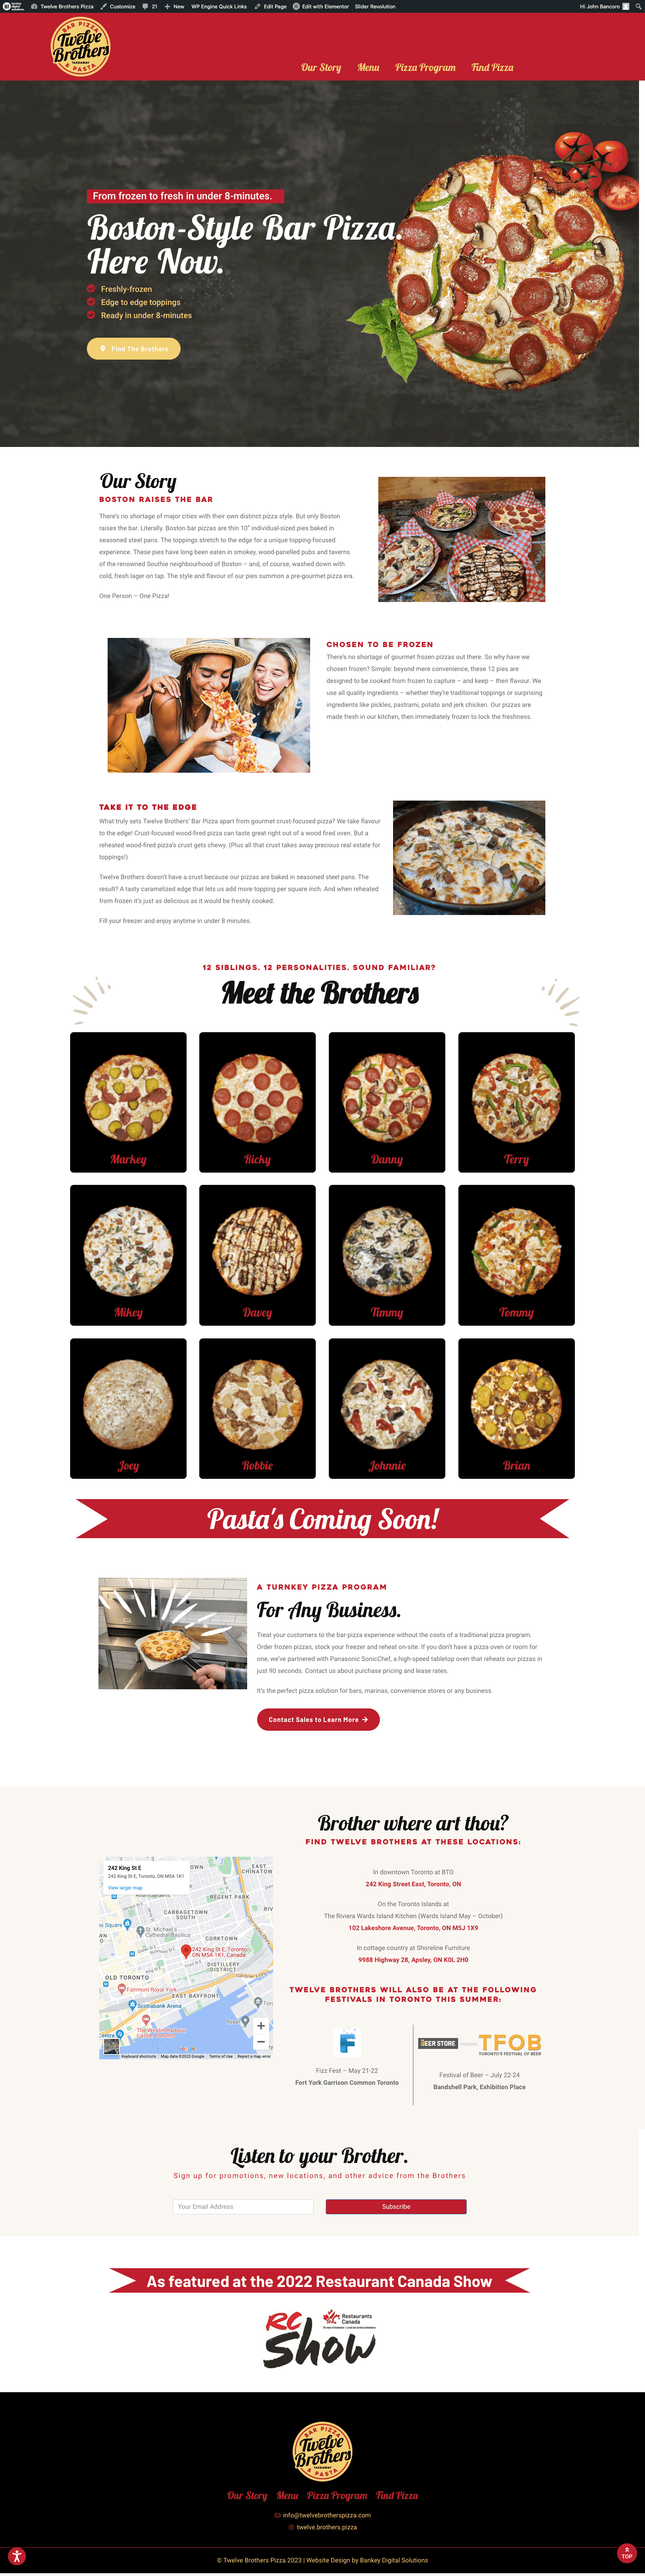 website-design-pizza-shop